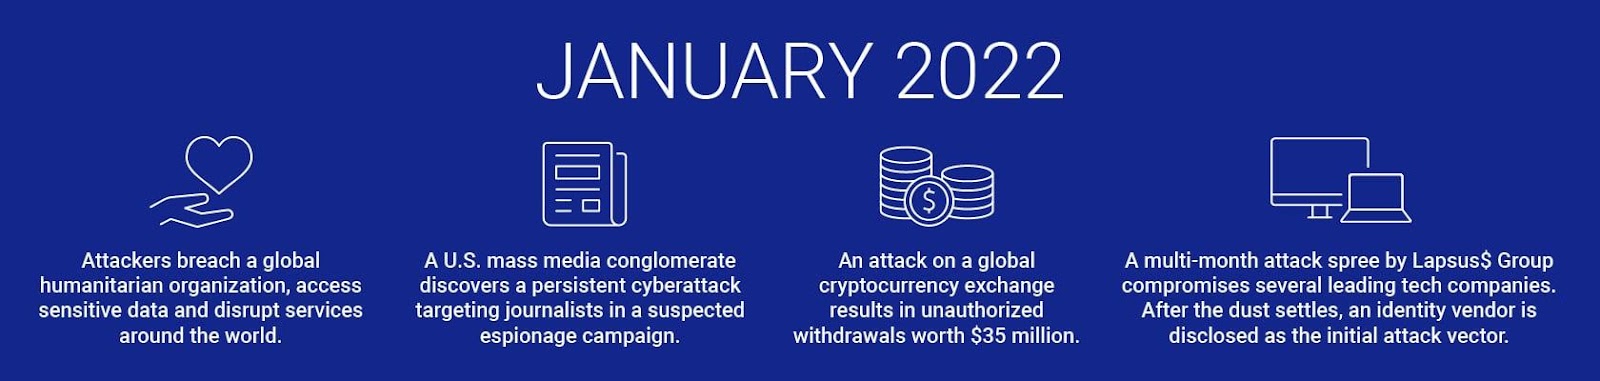 January 2022 Breaches